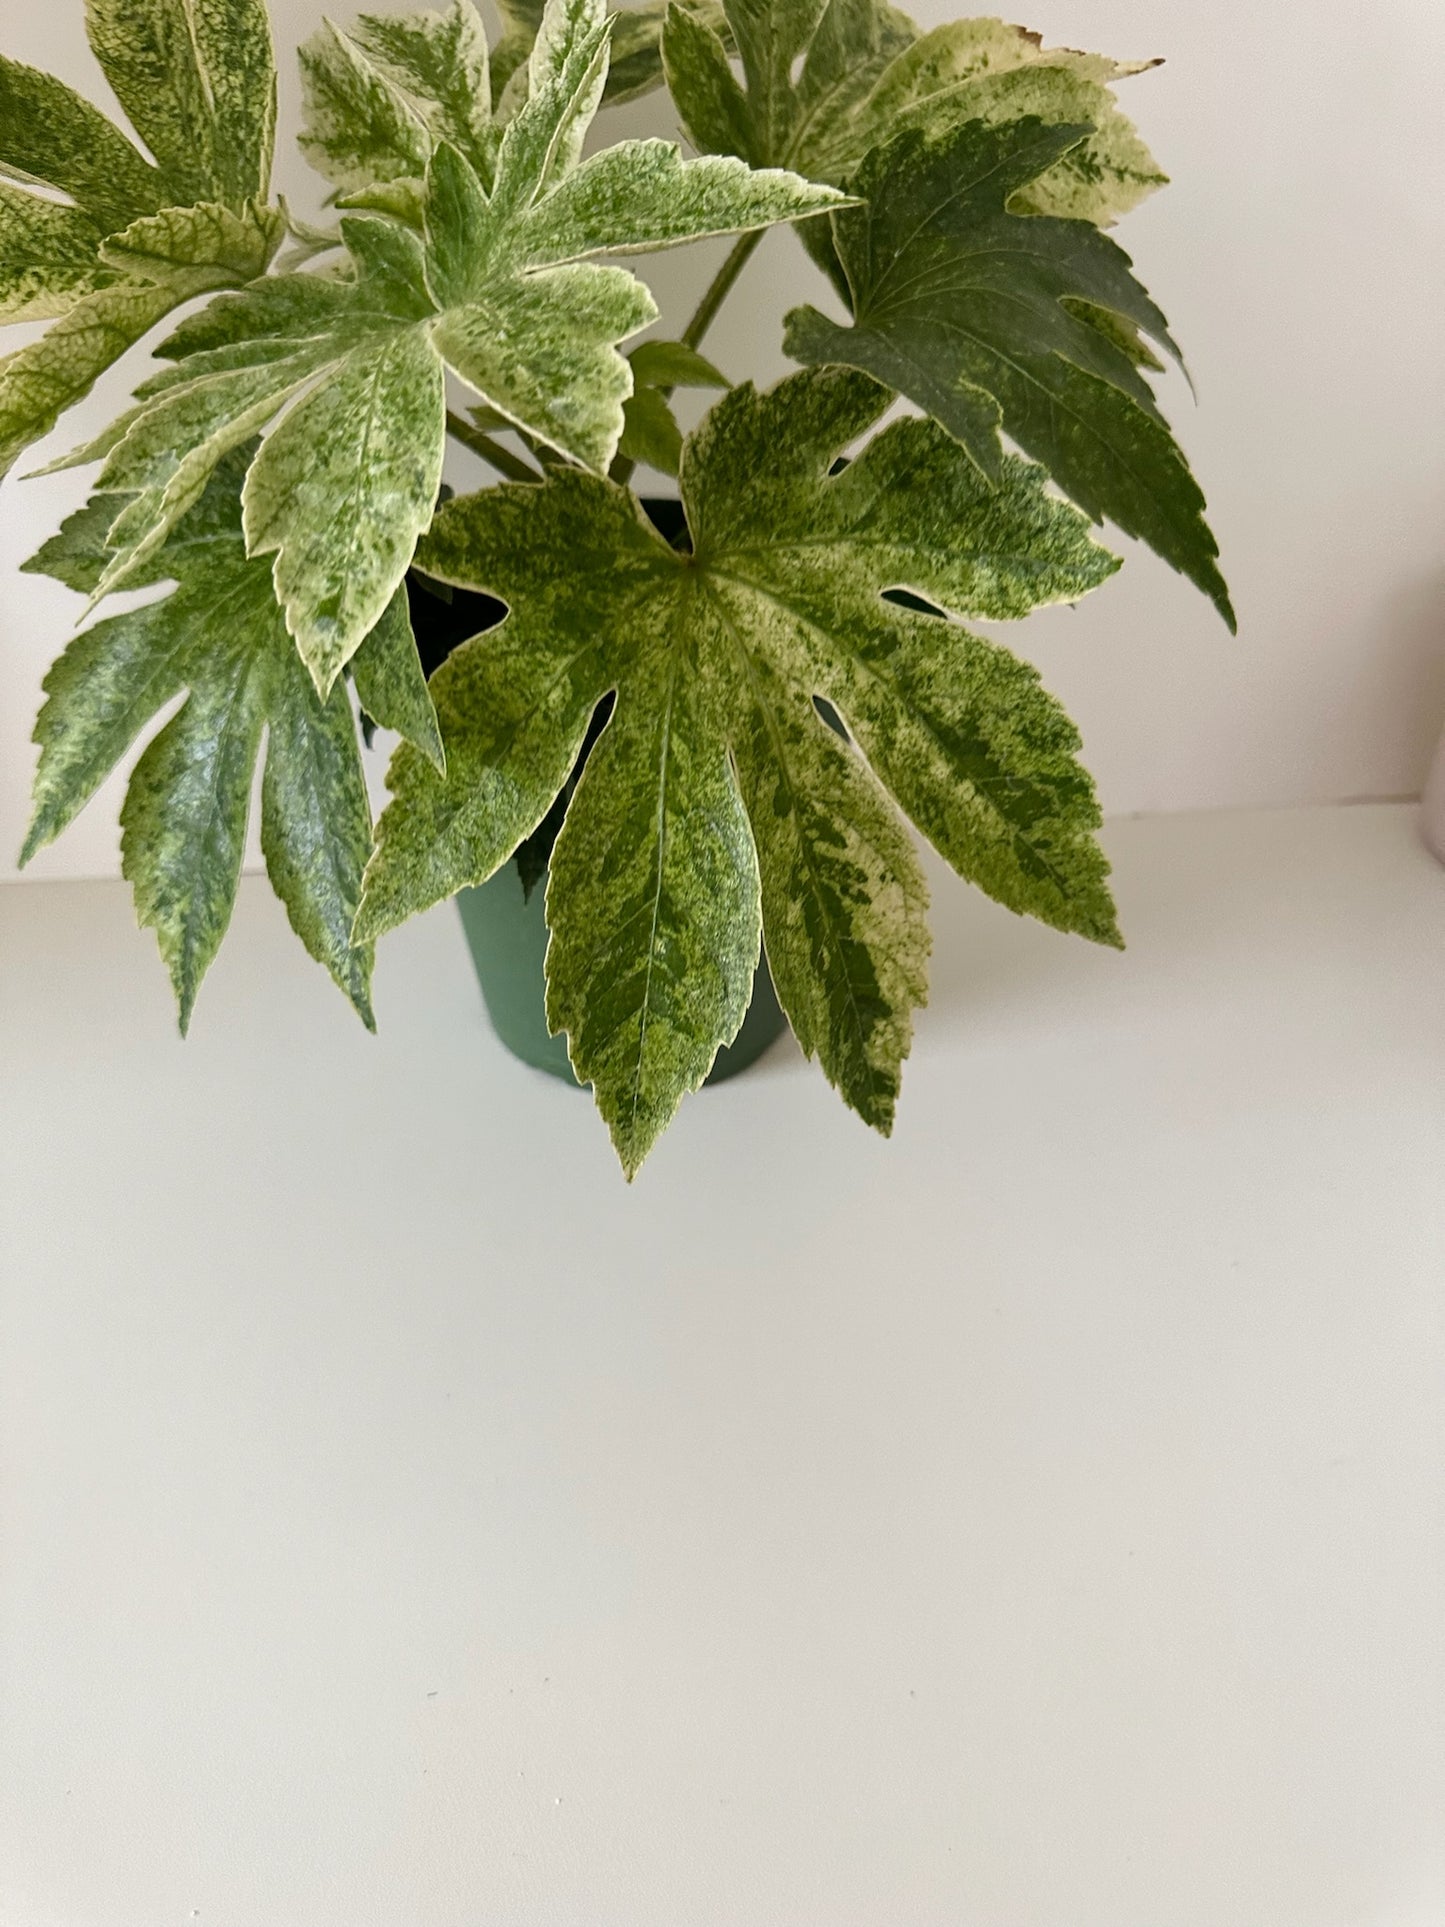 Fatsia Japonica 'Spider's Web'- Green & White Splashed Foliage, Shade Tropical Plant